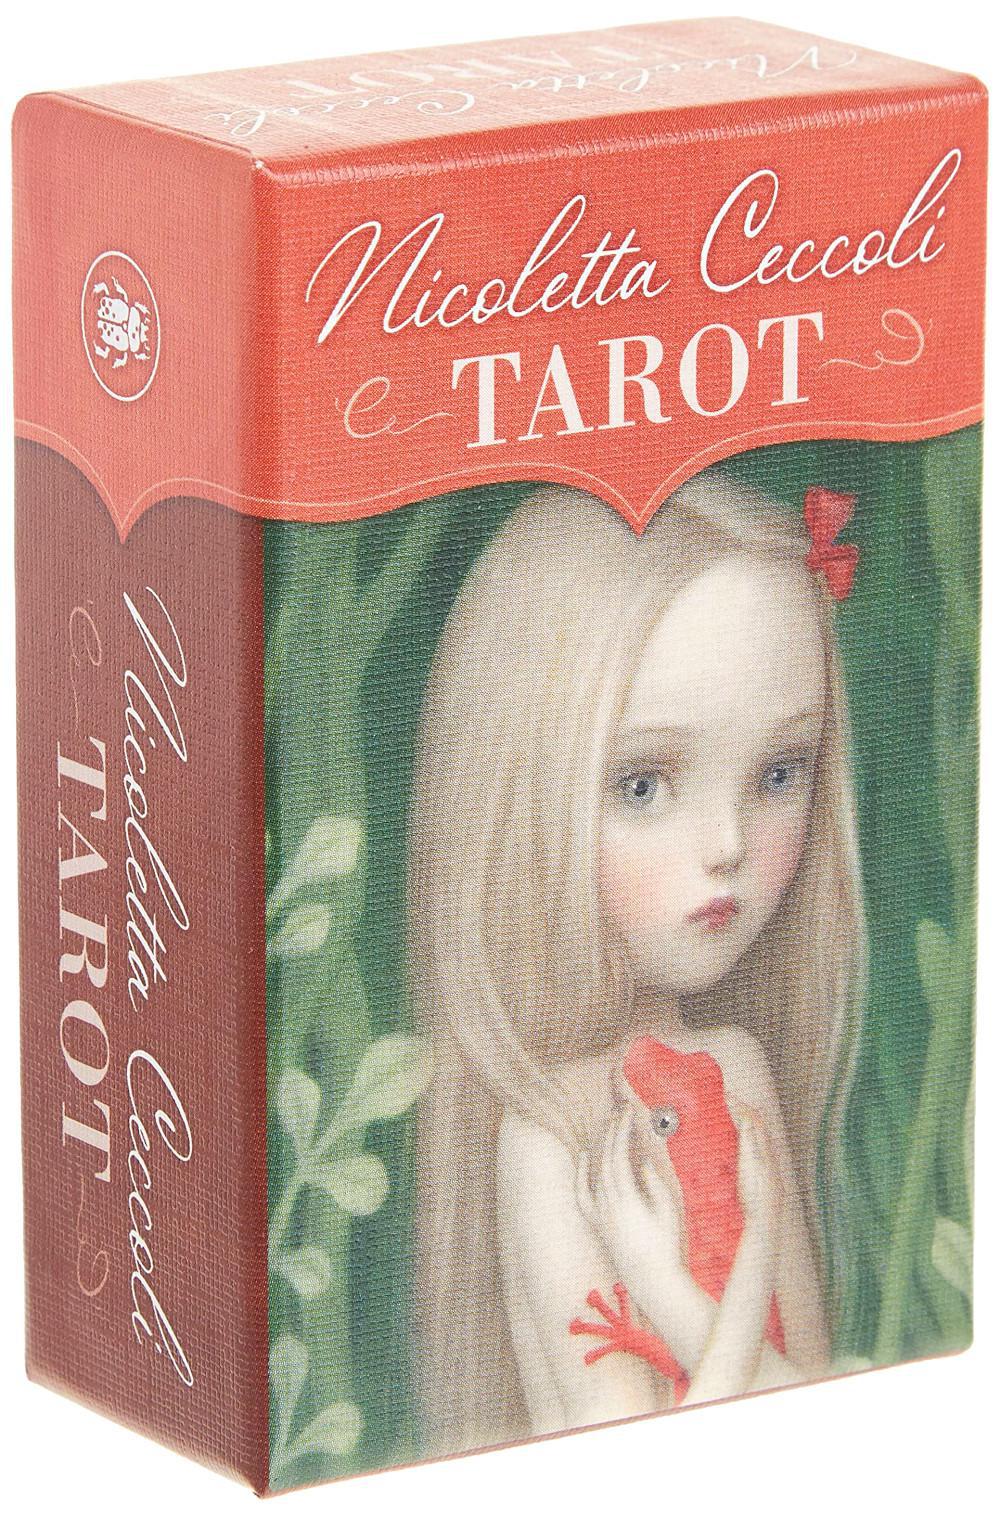 Мини Таро Николетта Чекколи = Tarot Nicoletta Ceccoli (78 карт + многоязычная иструкция)